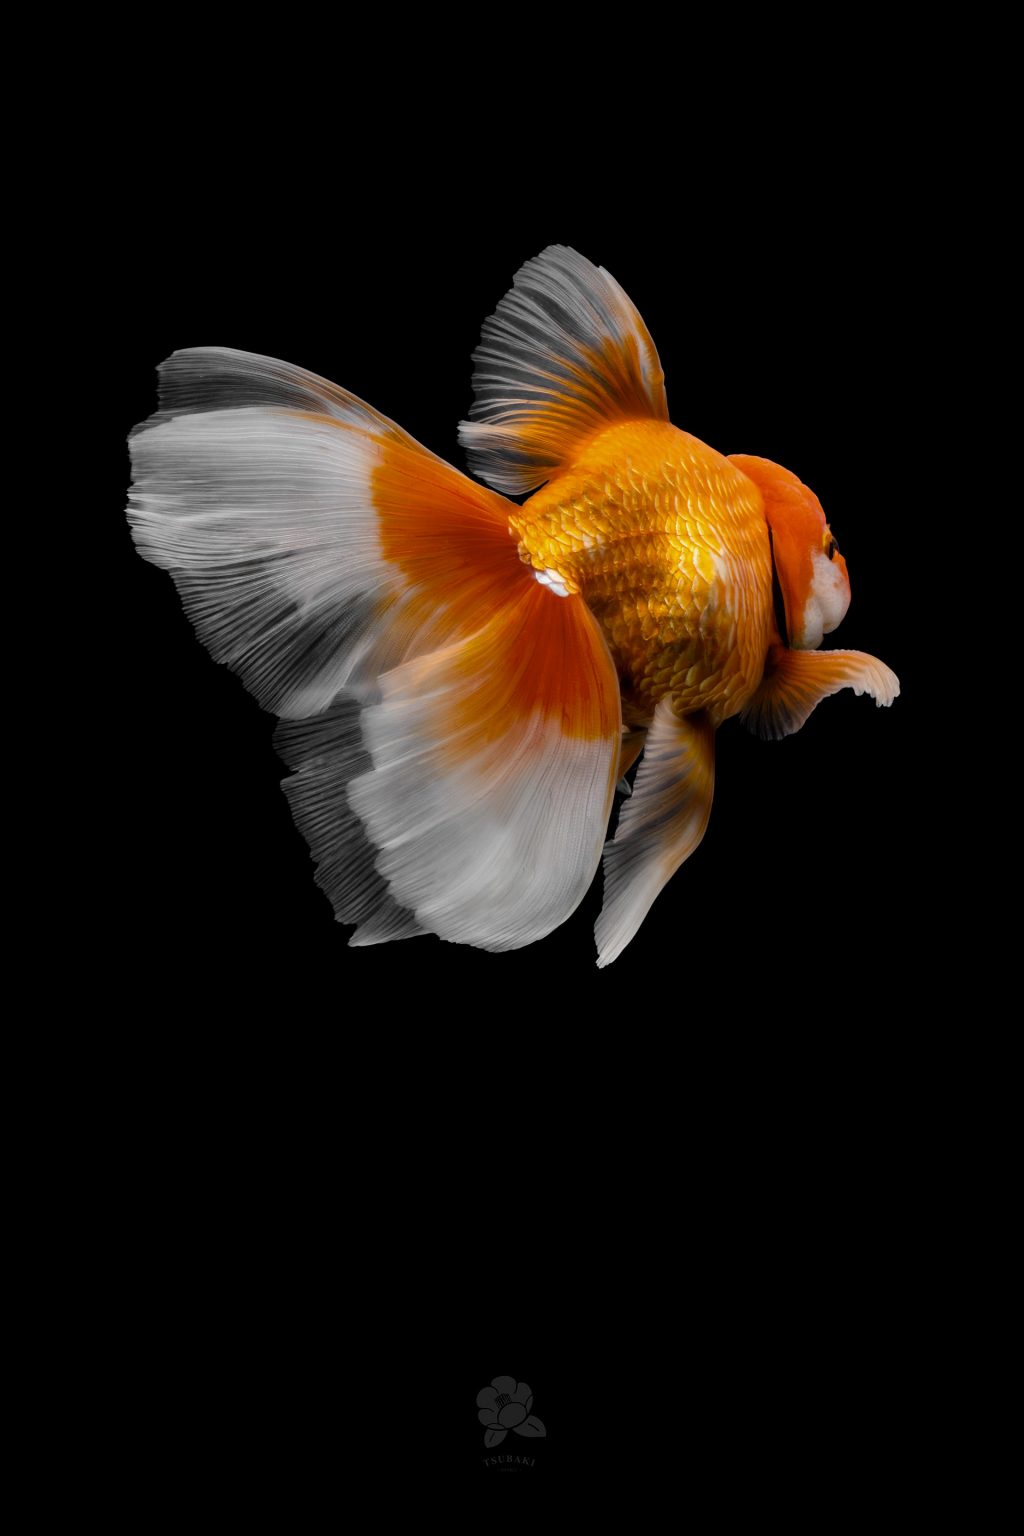 goldfish tsubaki captivating wired bēhance fascino discreto